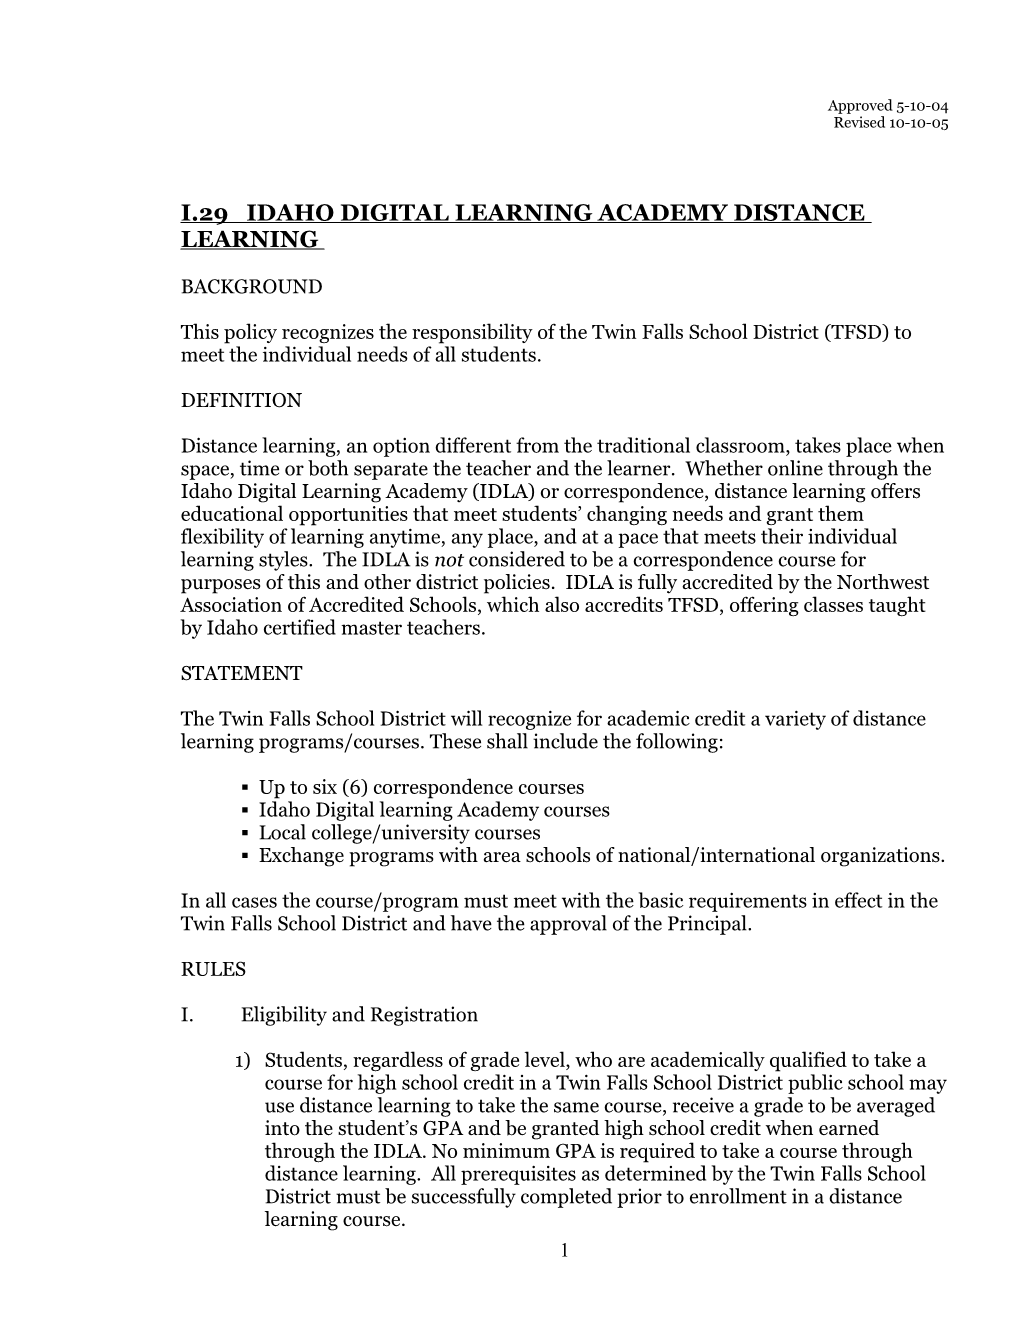 I.29 Idaho Digital Learning Academy Distance Learning